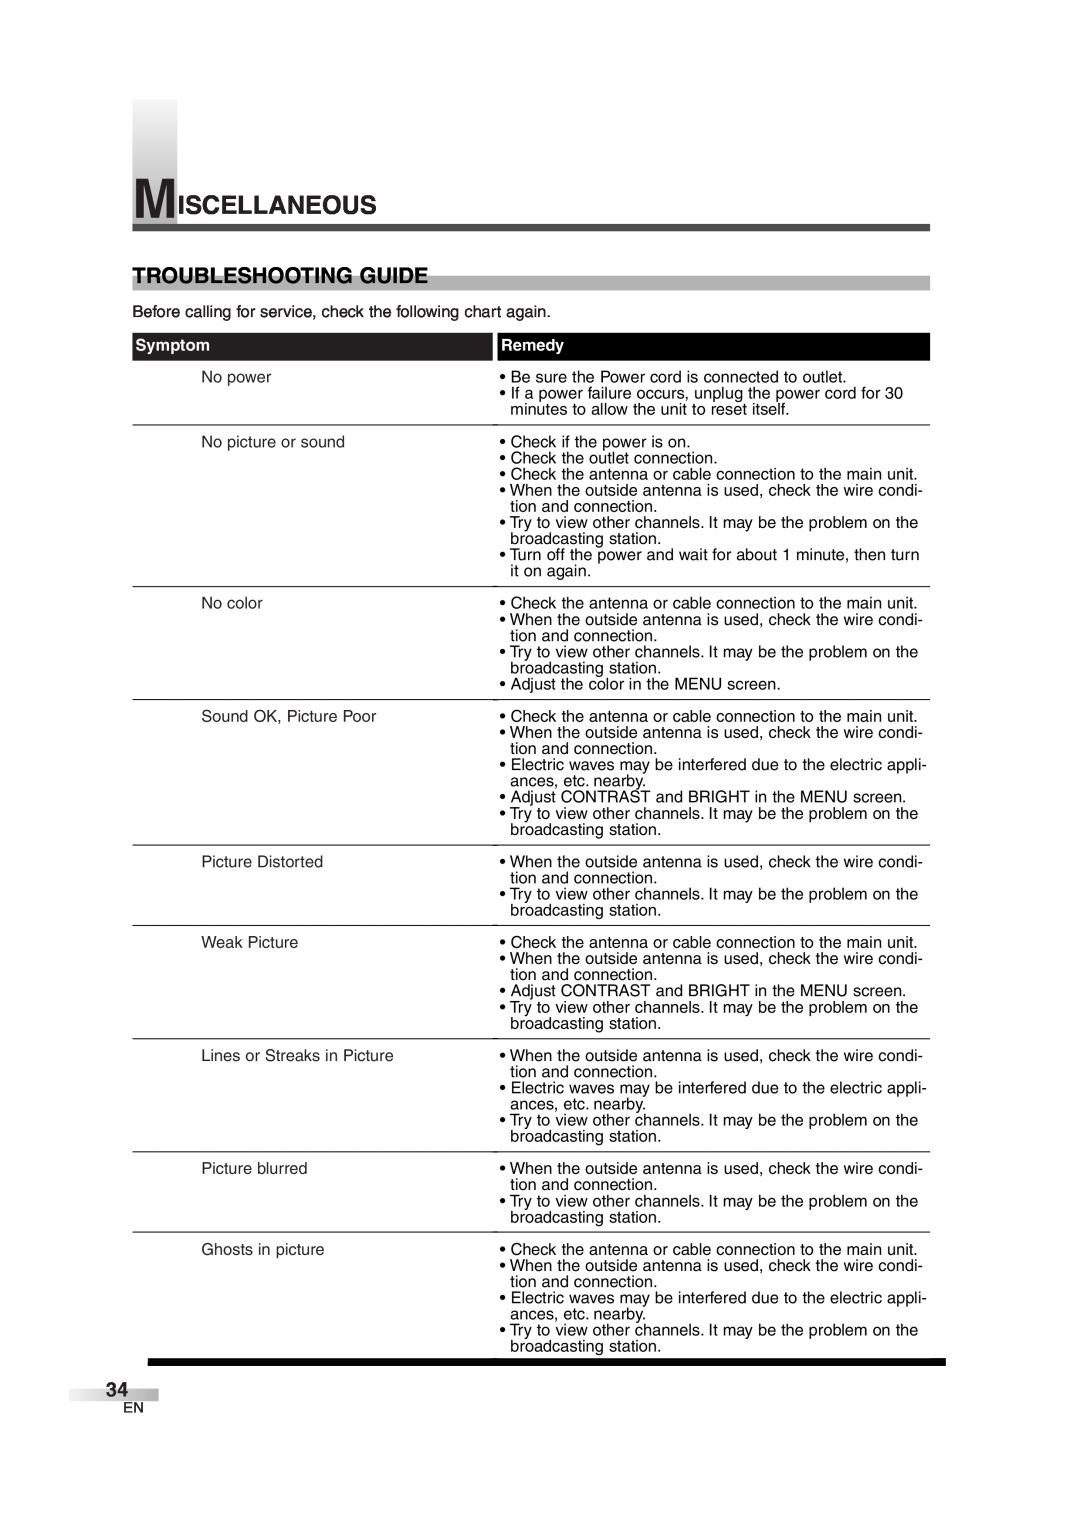 FUNAI MJ427GG manual Miscellaneous, Troubleshooting Guide, Symptom, Remedy 